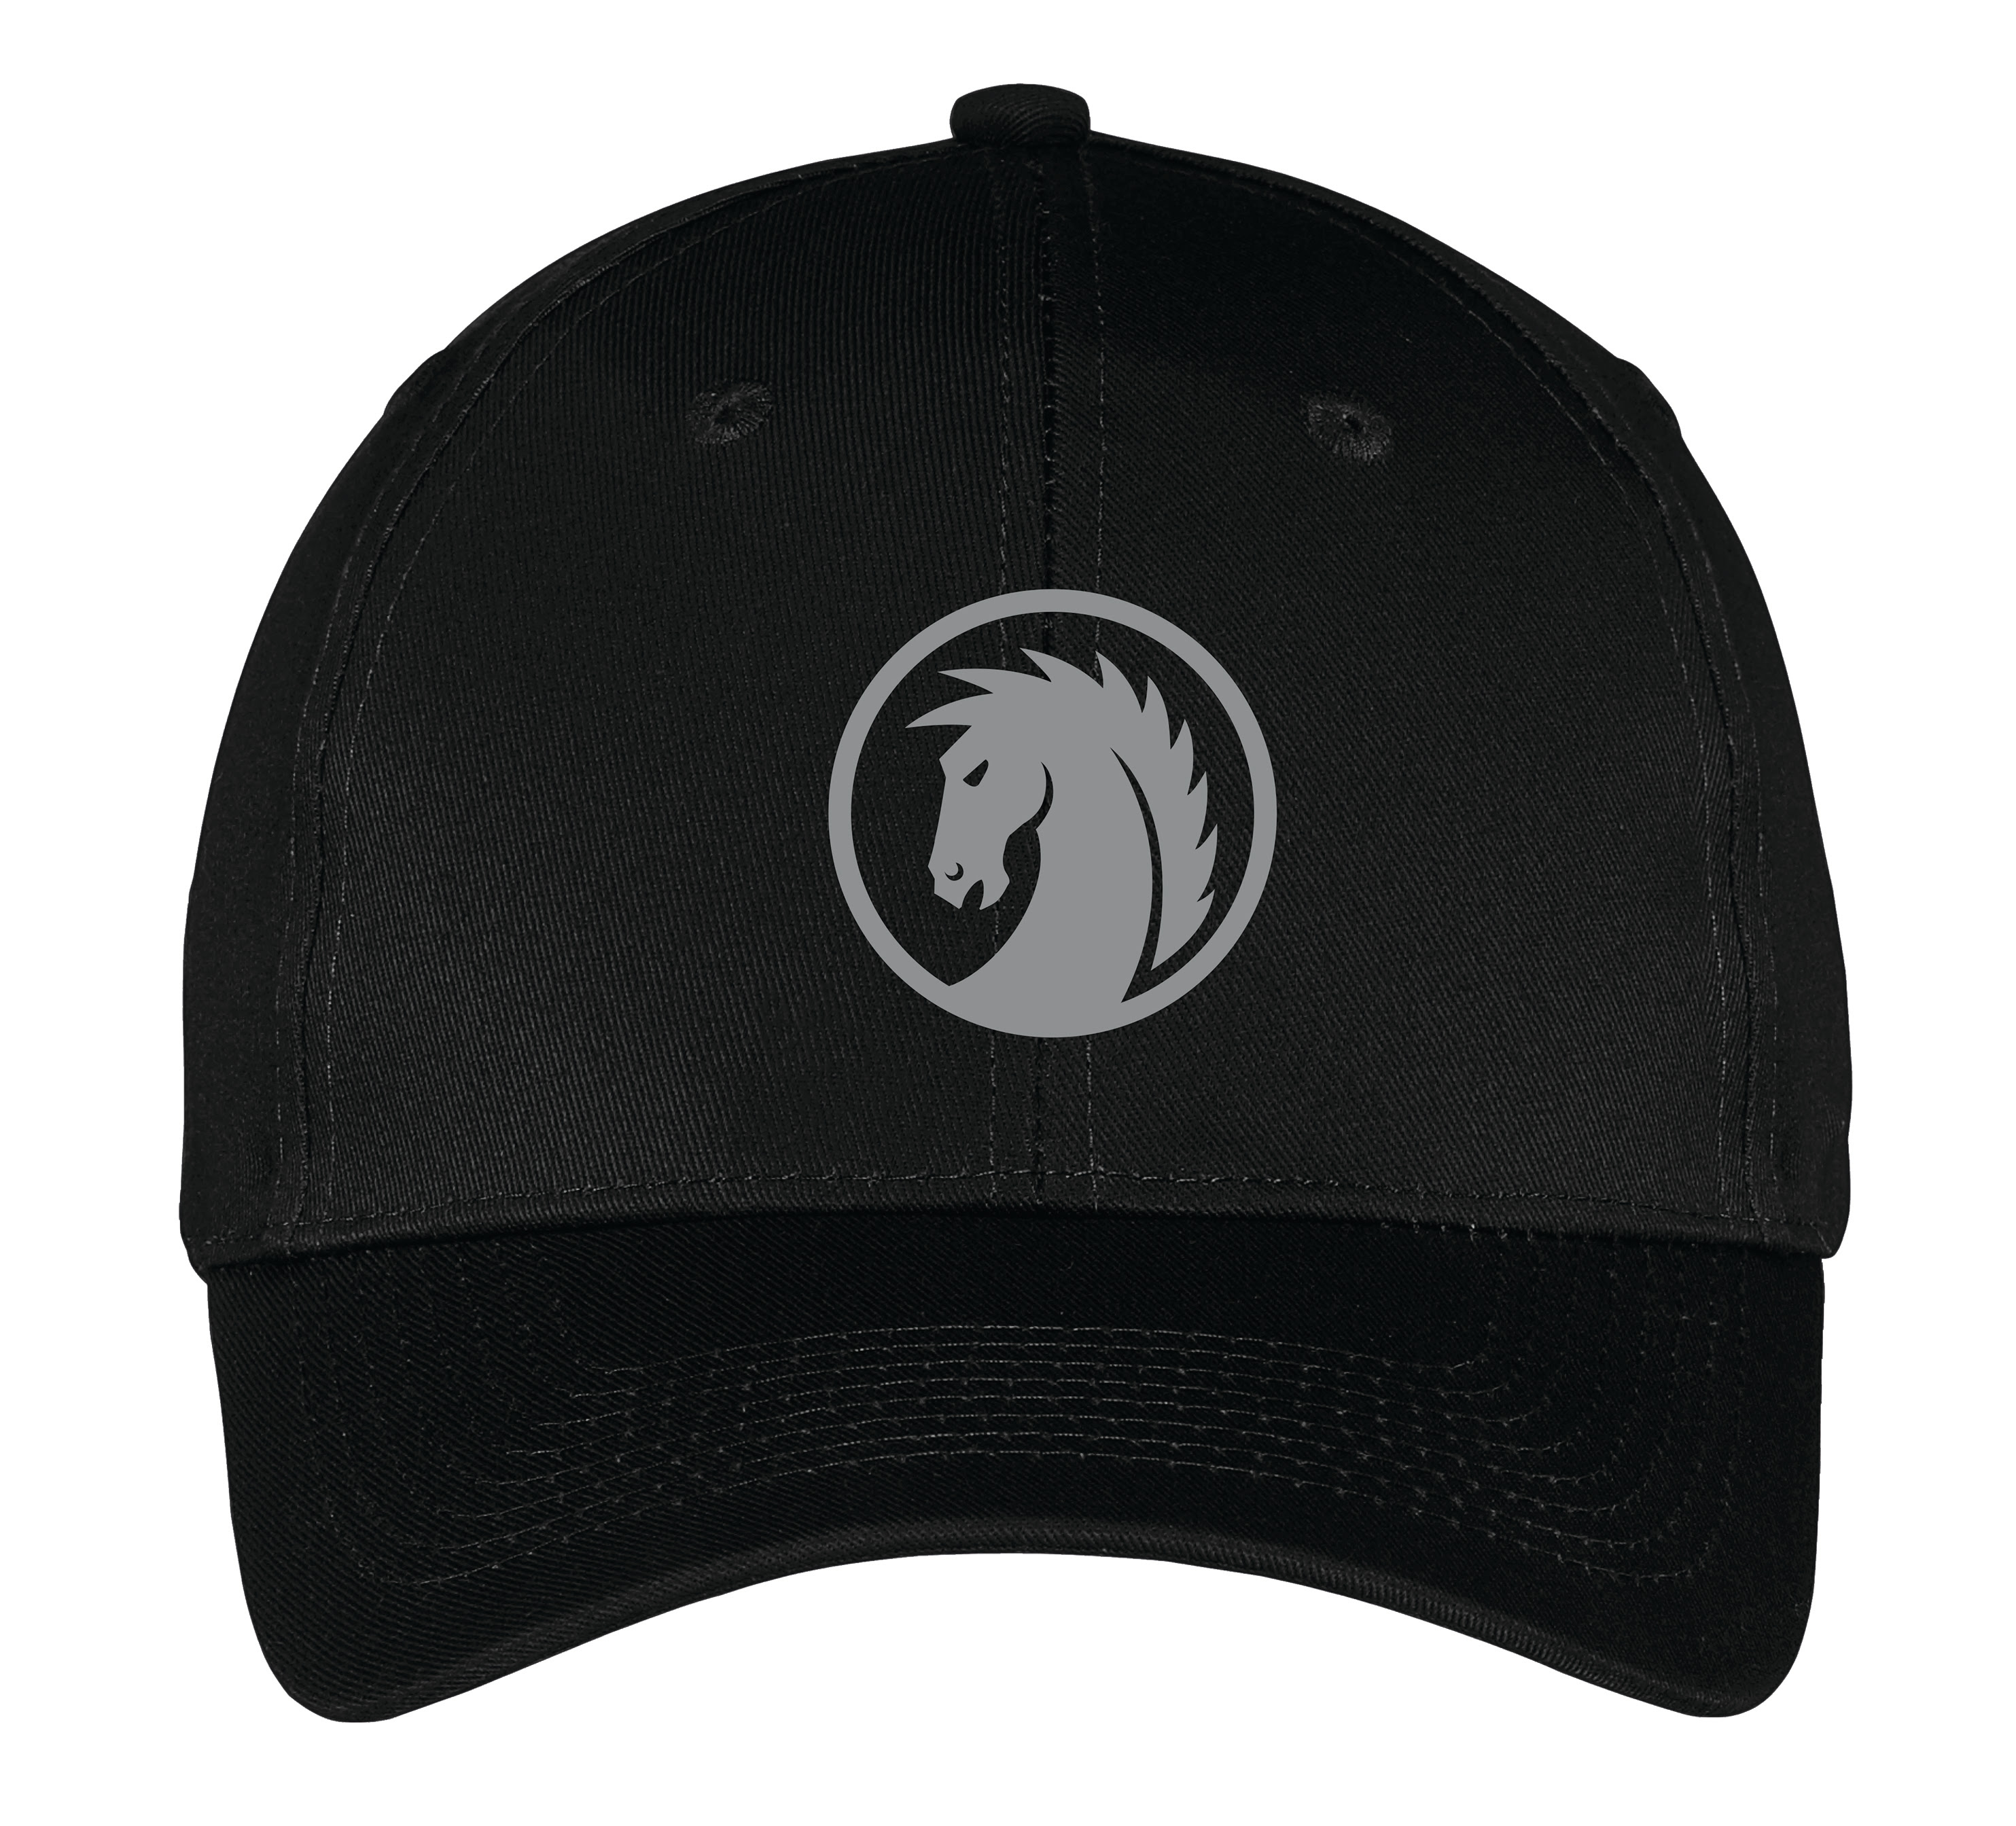 New Dark Horse Cap